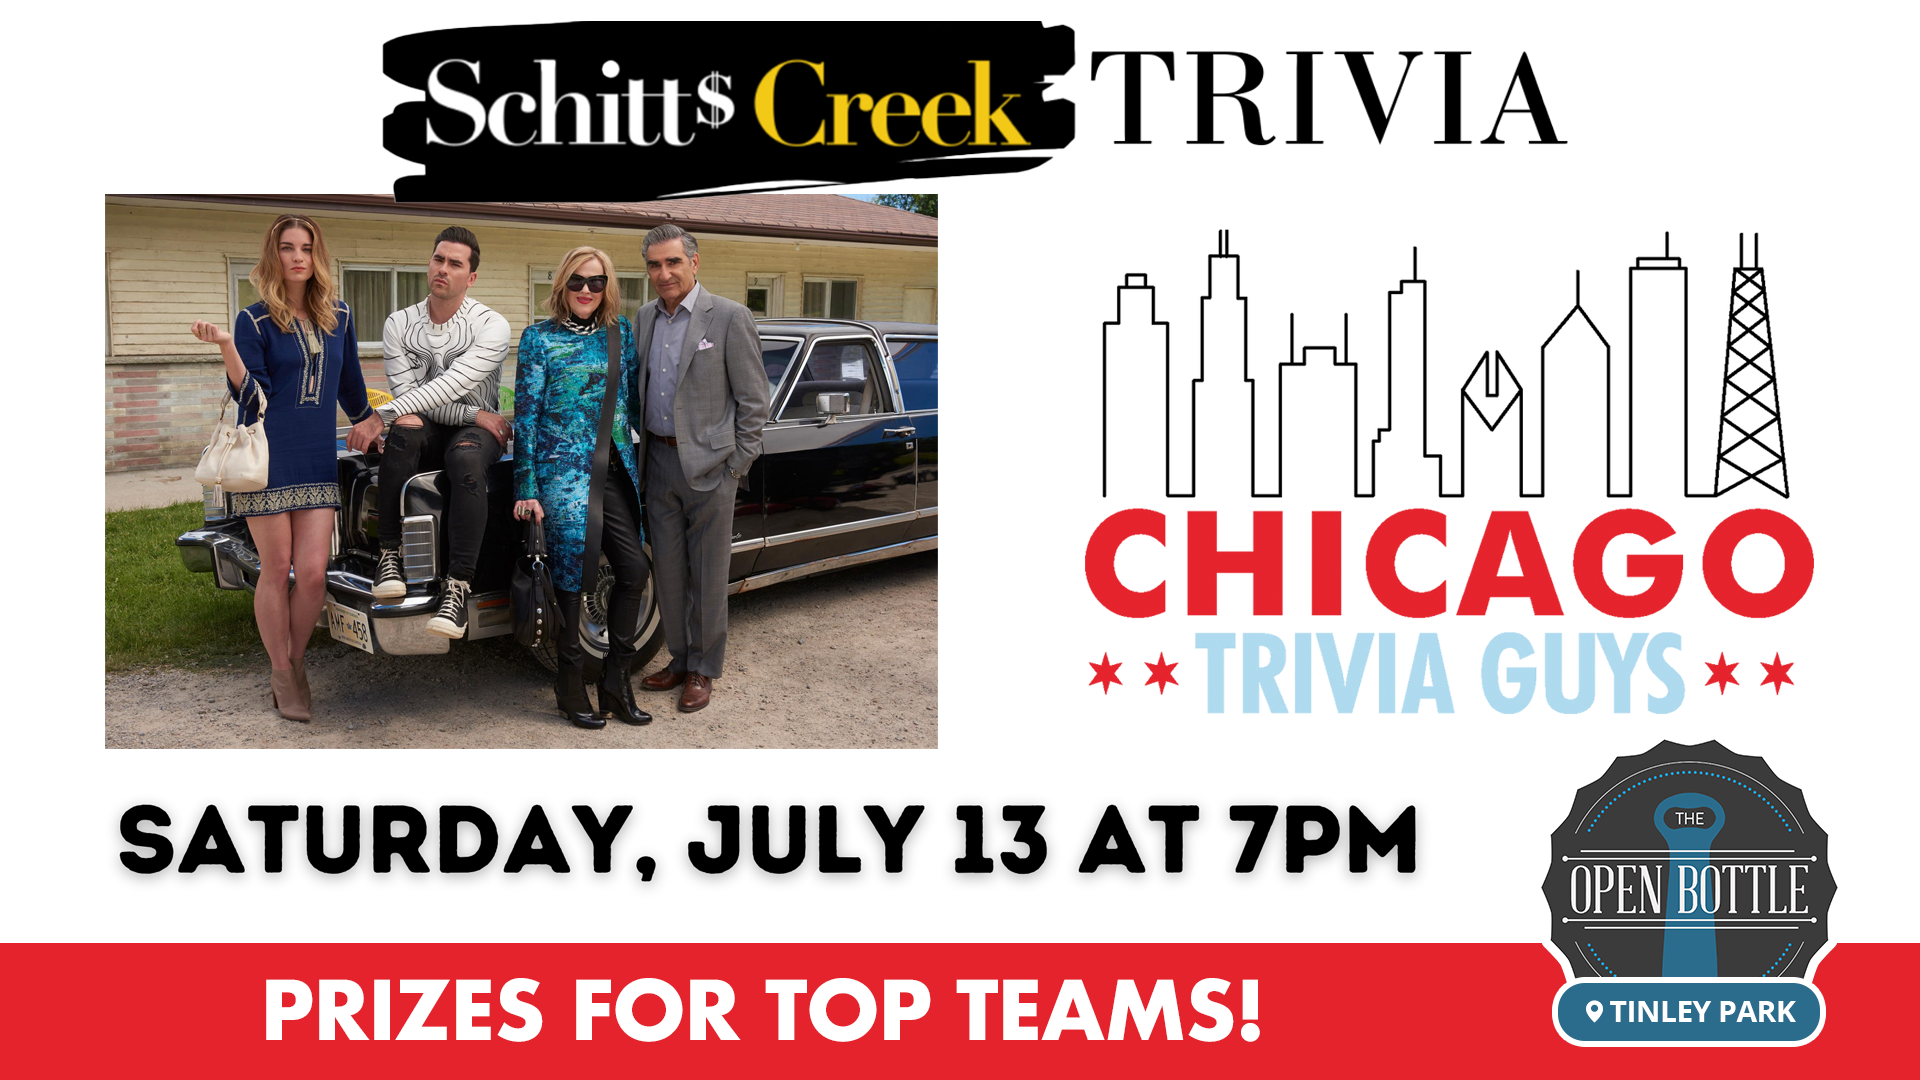 Event: Schitt’s Creek Trivia with Chicago Trivia Guys